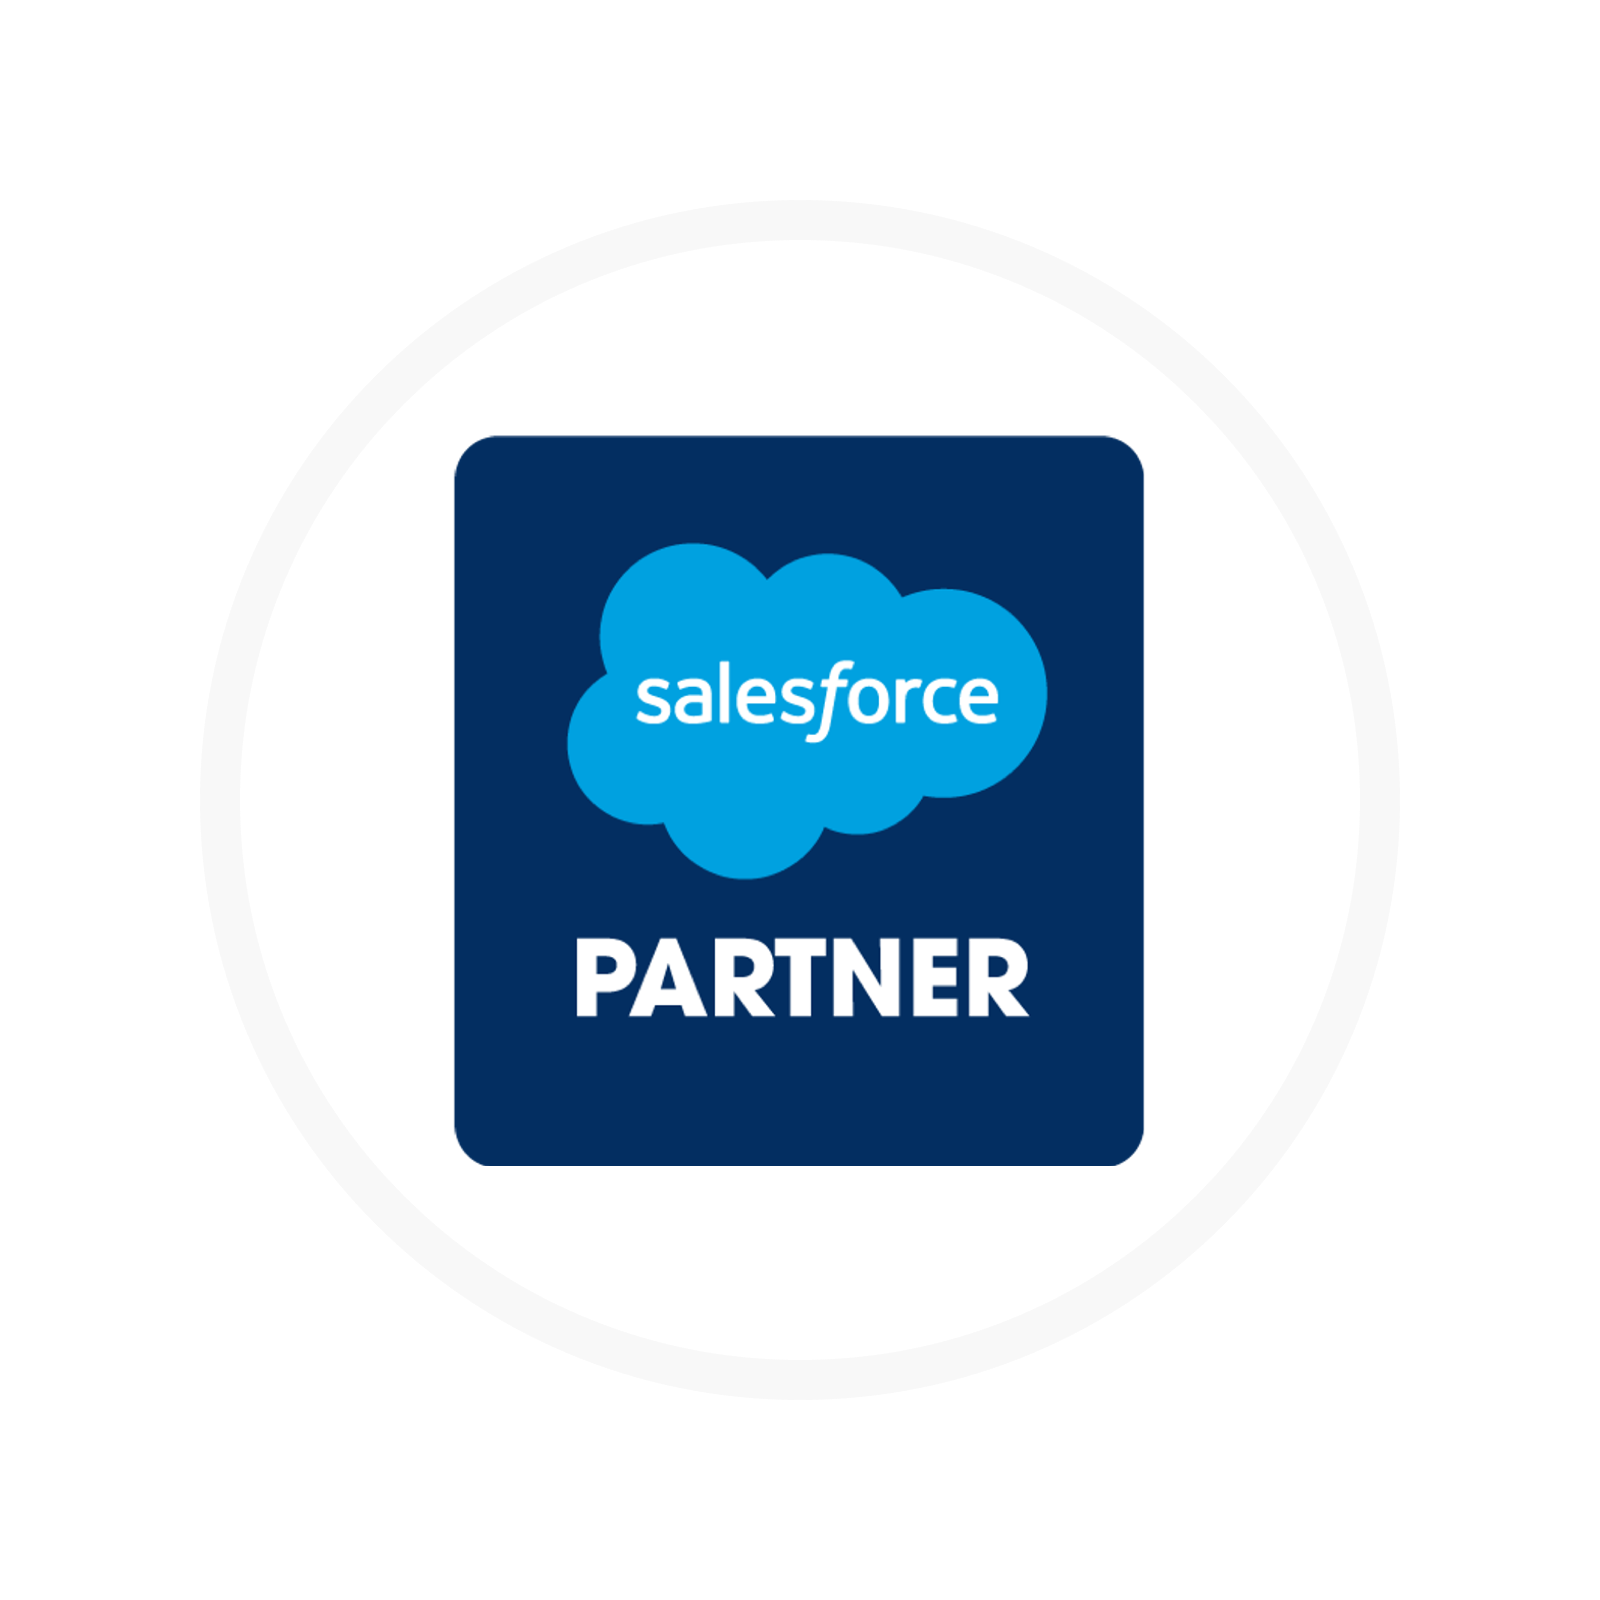 Salesforce Partner.